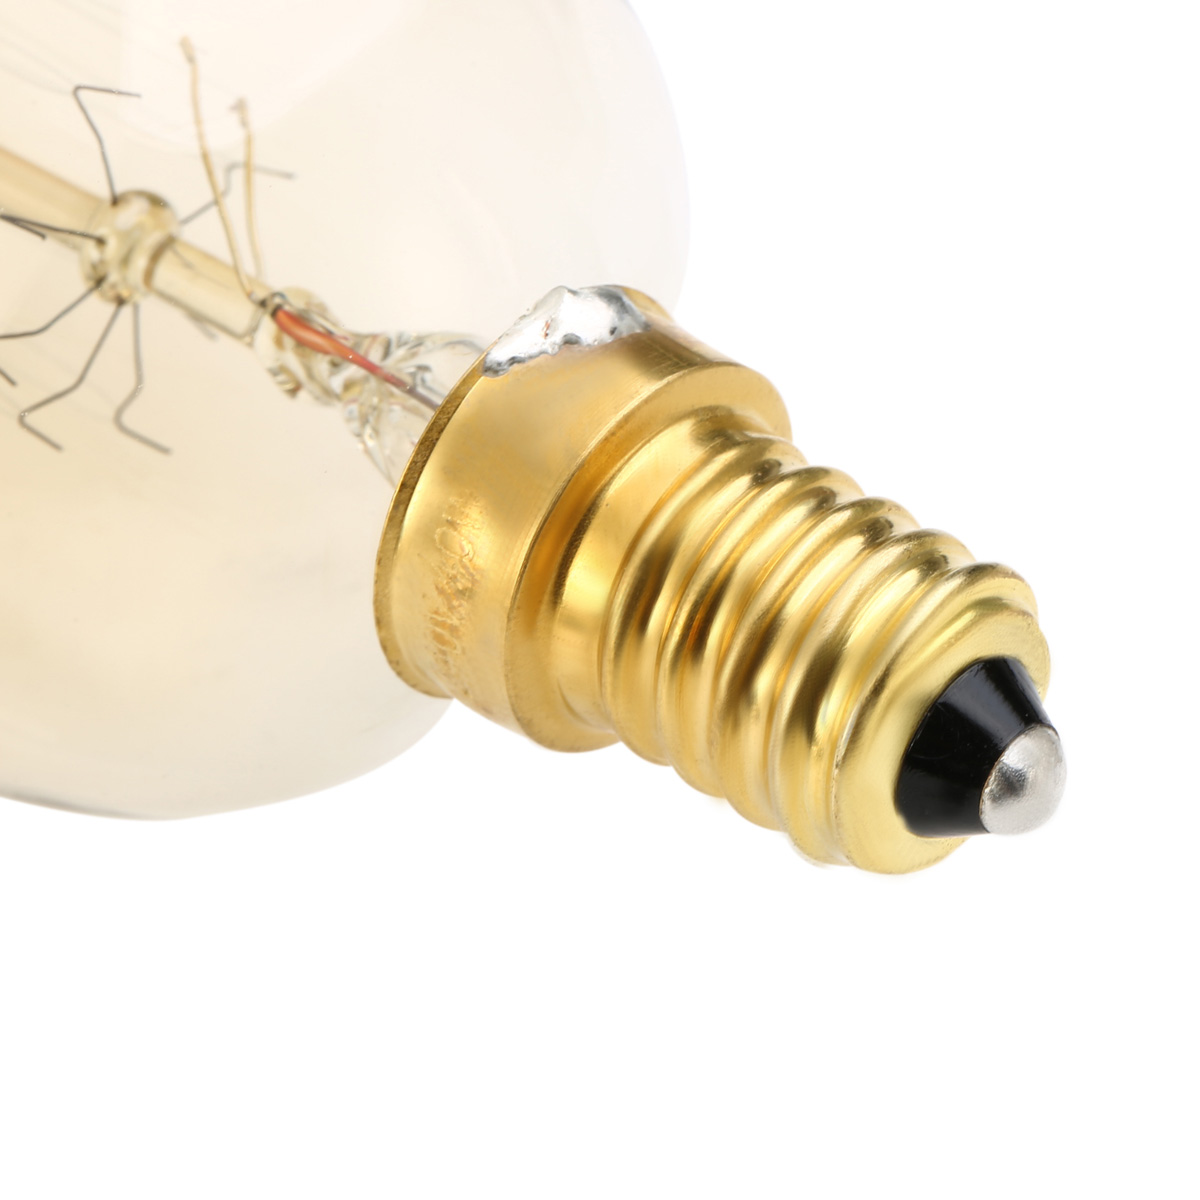 Kingso-E14-T45-40W-Edison-Amber-Vintage-Incandescent-Light-Bulb-for-Home-Decoration-AC220V-1517945